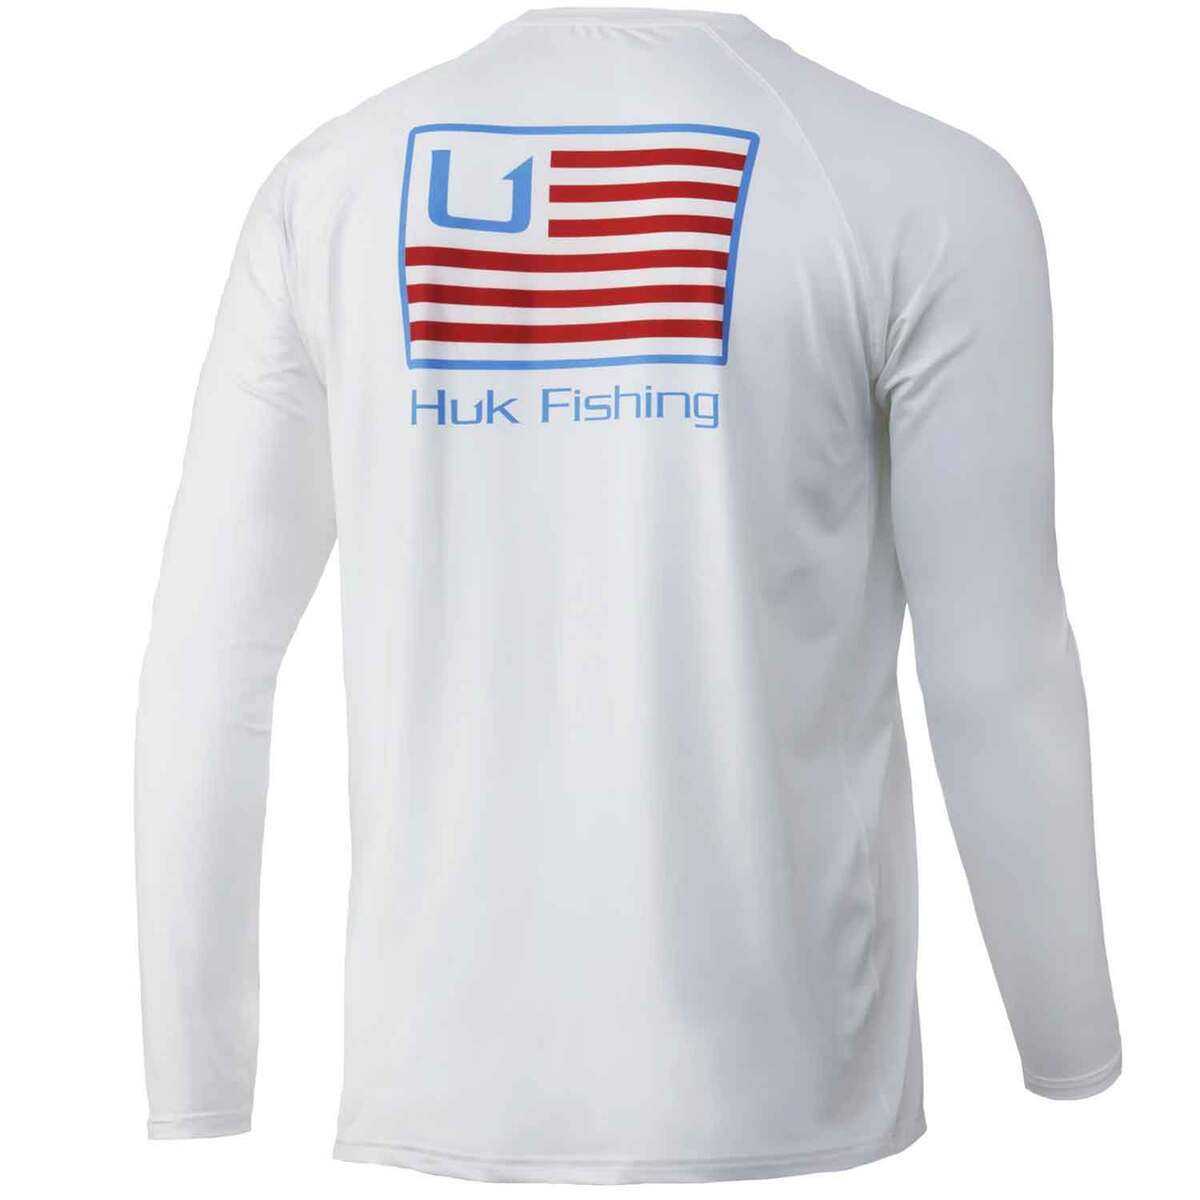 HUK Fishing Performance Shirt White Men's Long Sleeve Fishing